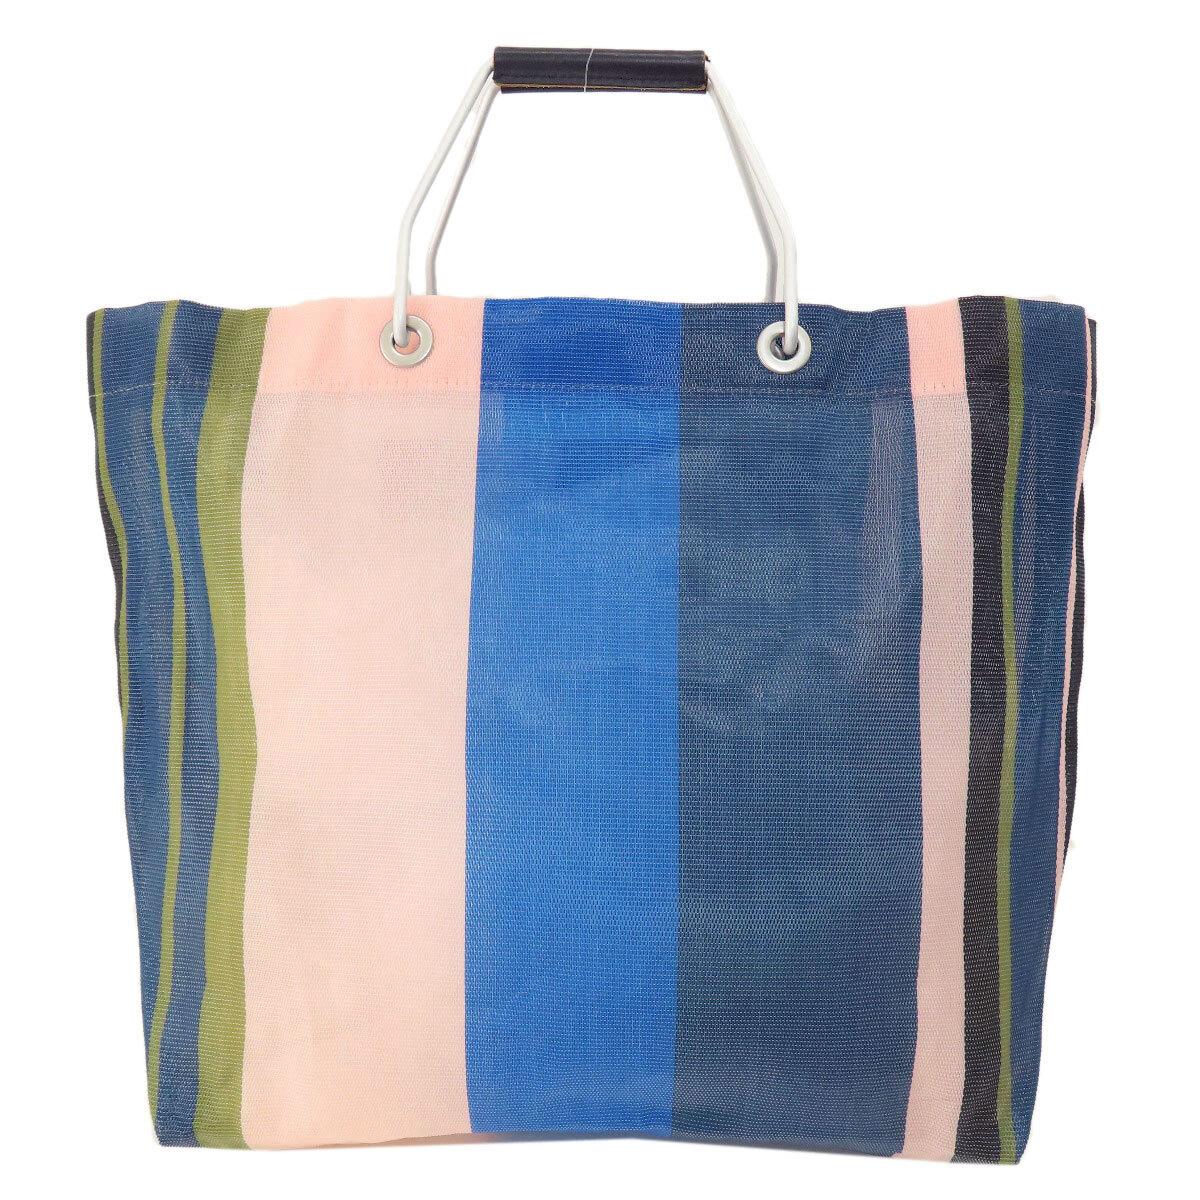 MARNI Marni flower Cafe stripe tote bag nylon material lady's used 